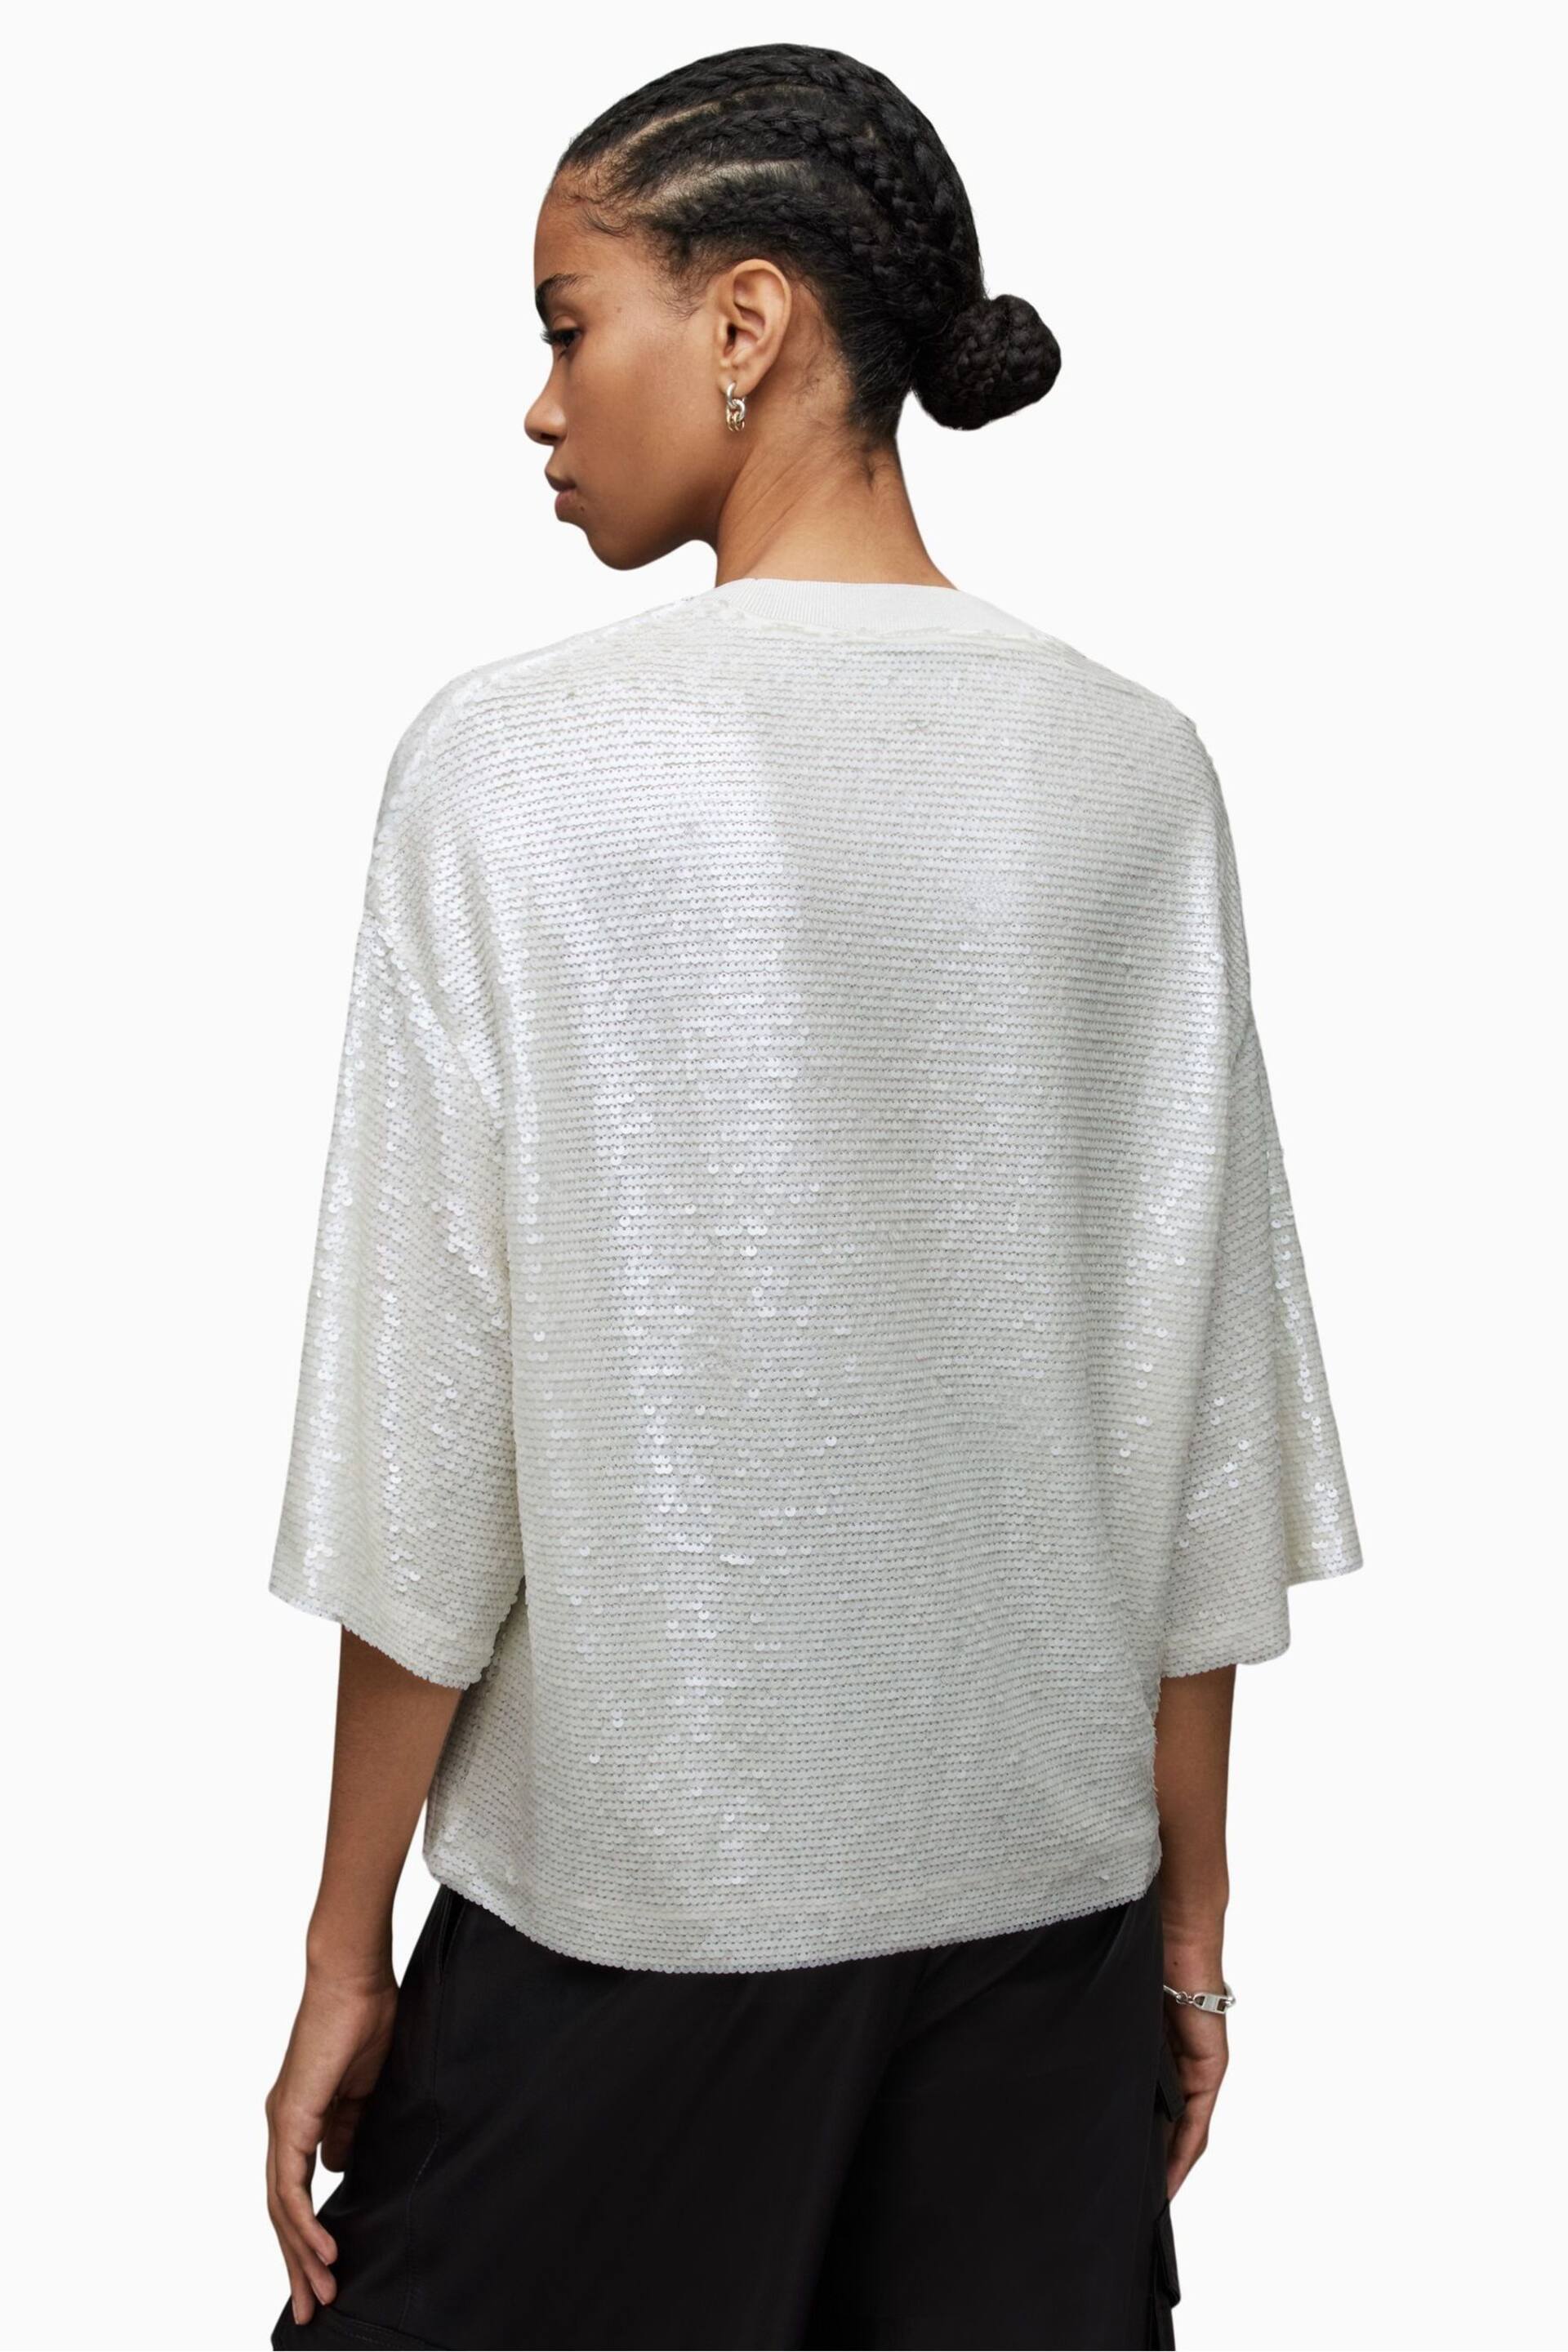 AllSaints Cream Juela T-Shirt - Image 2 of 5